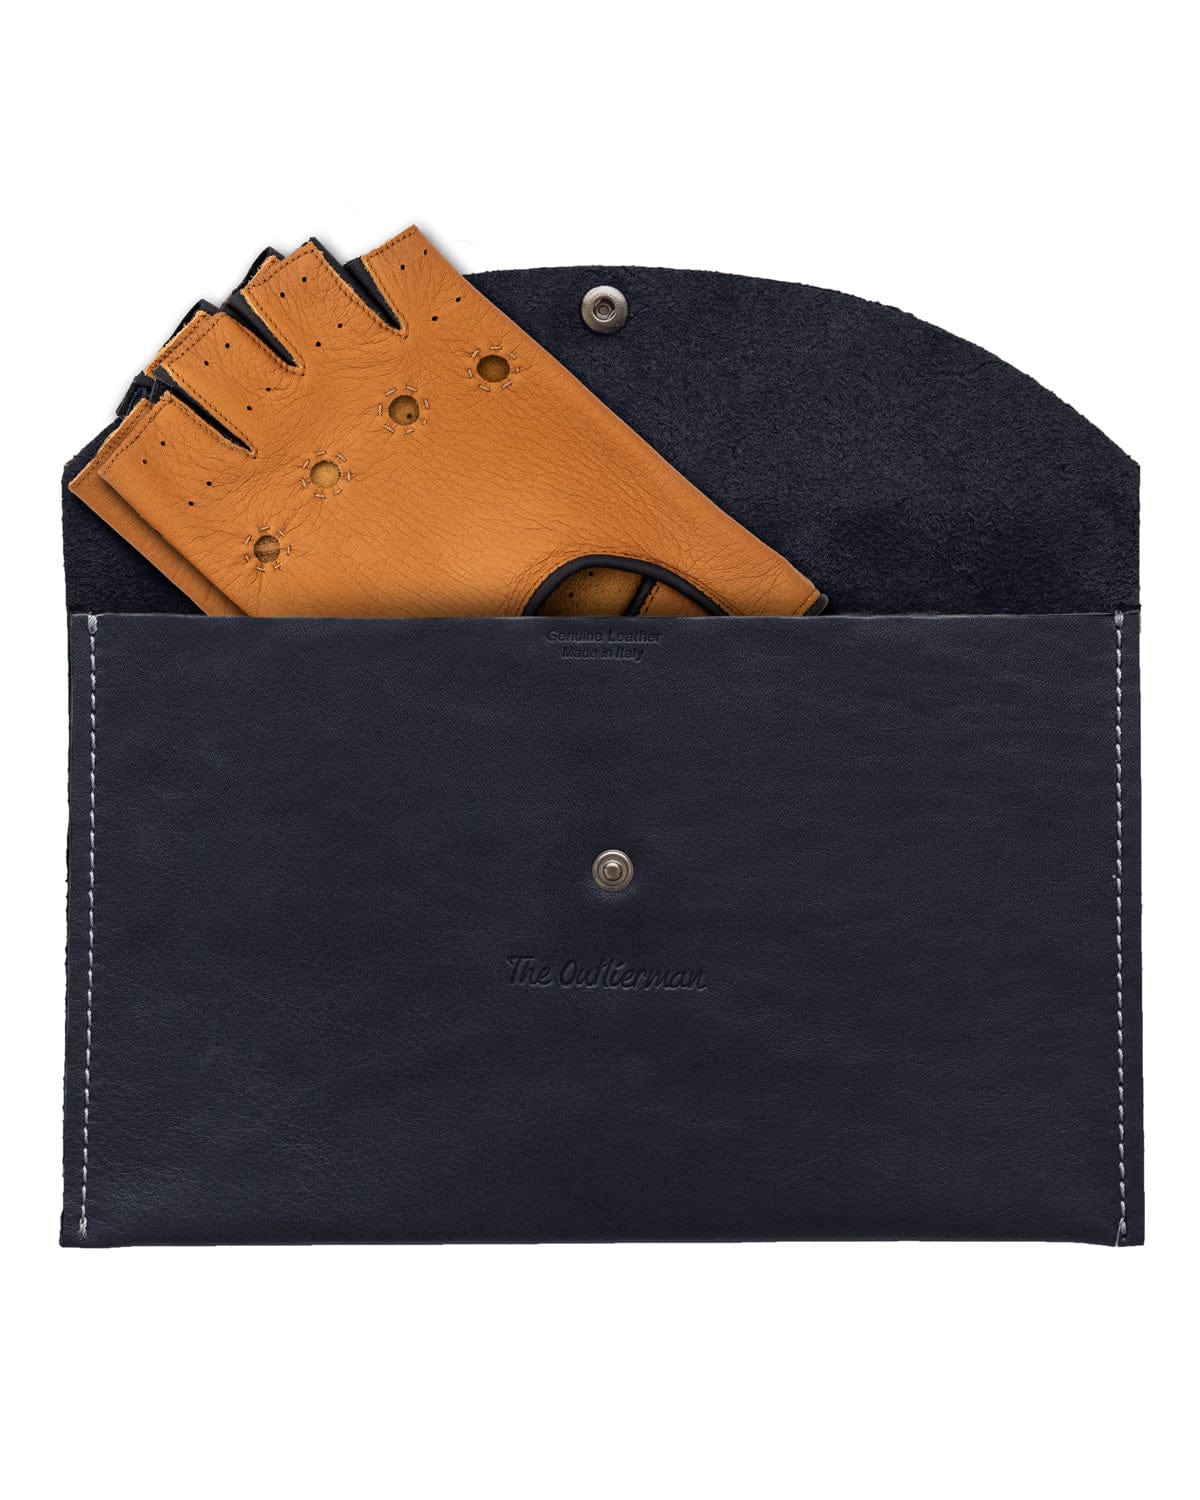 Fingerless Driving Gloves Dark Brown - Handmade in Italy – Leather